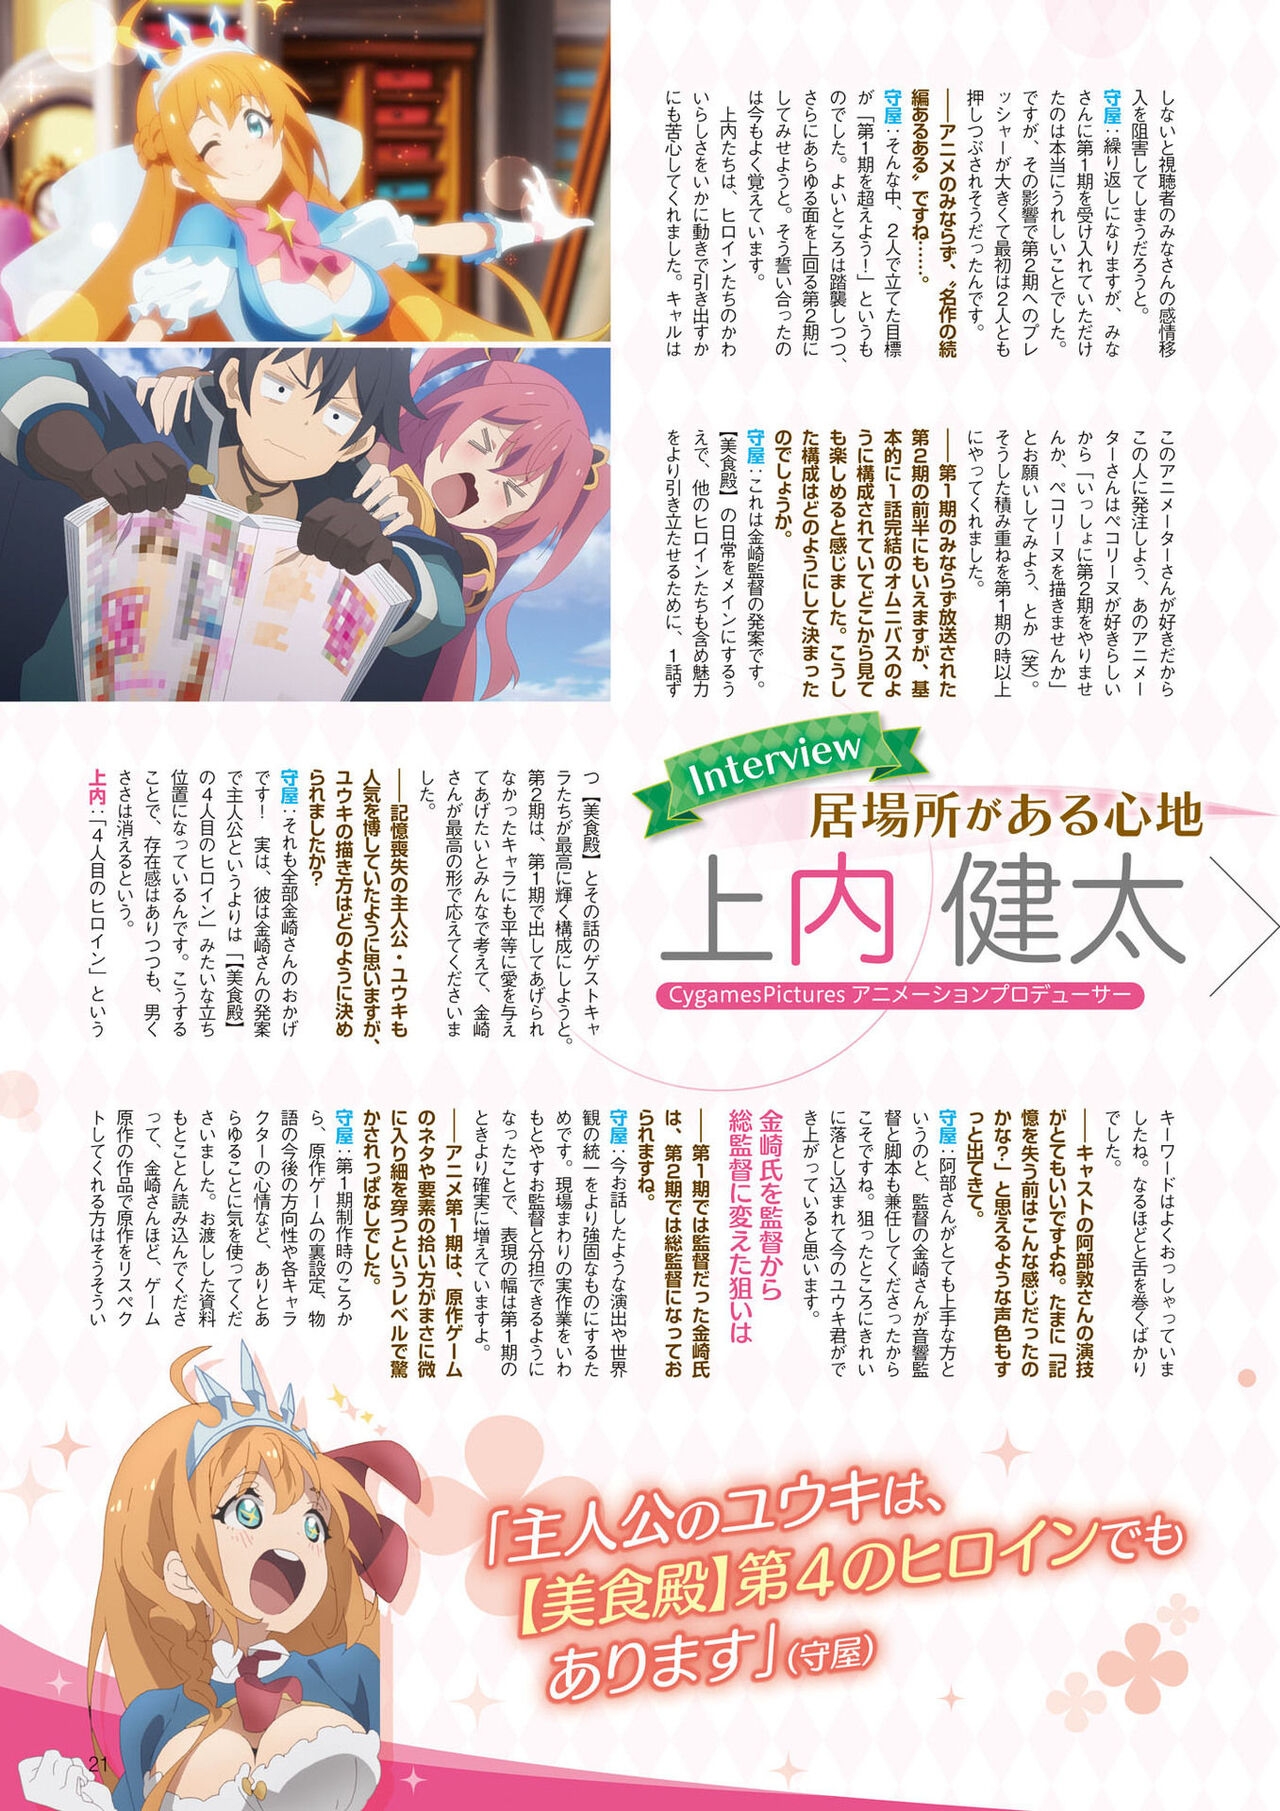 Dengeki G's Magazine #297 - April 2022 18